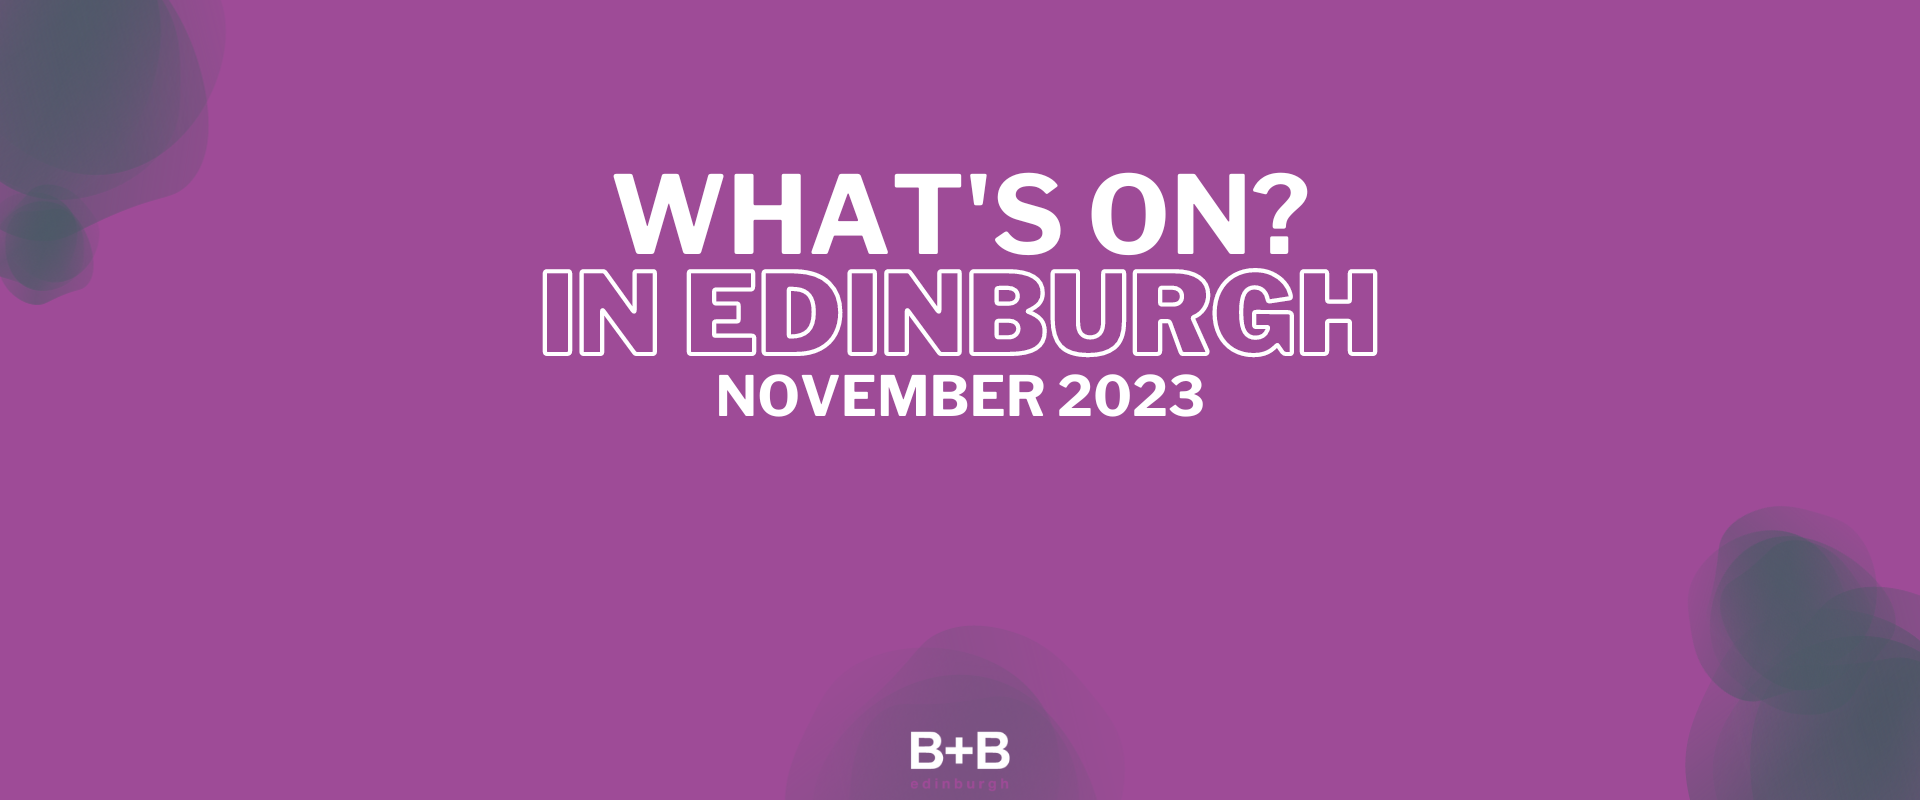 What's on in Edinburgh - November 2023- B+B Edinburgh